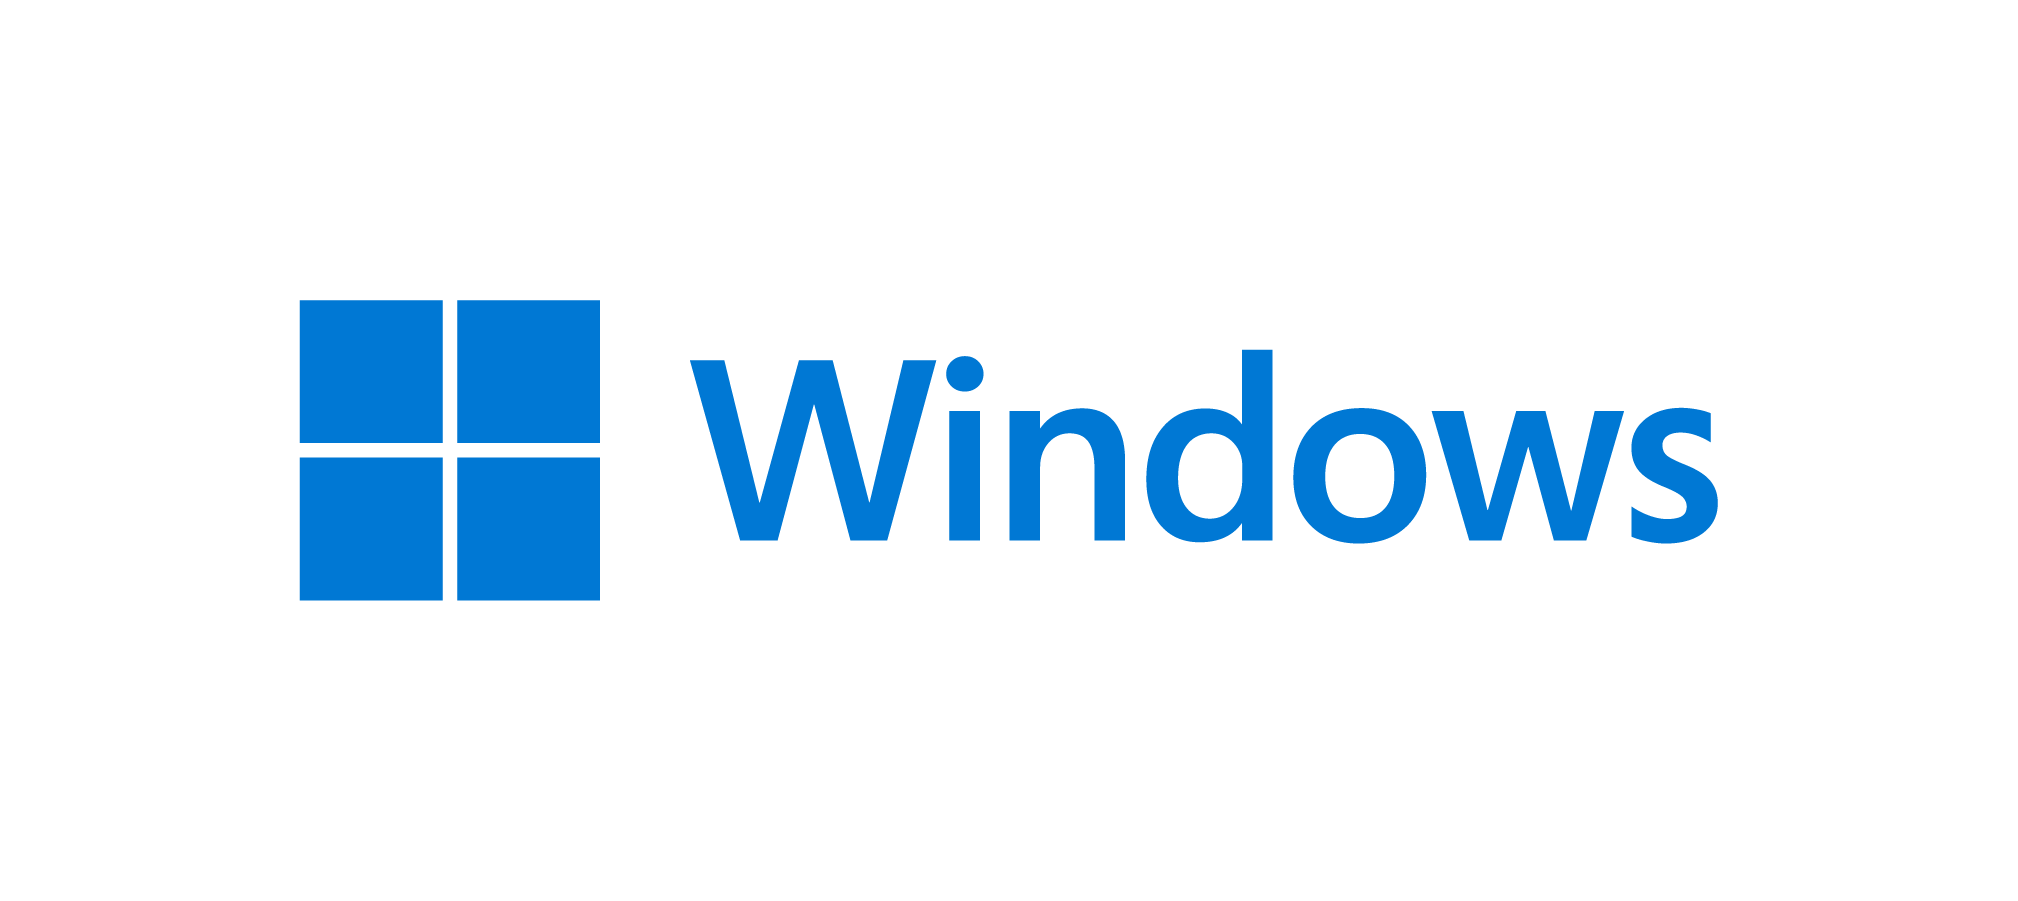 "Windows logo on a blue background"